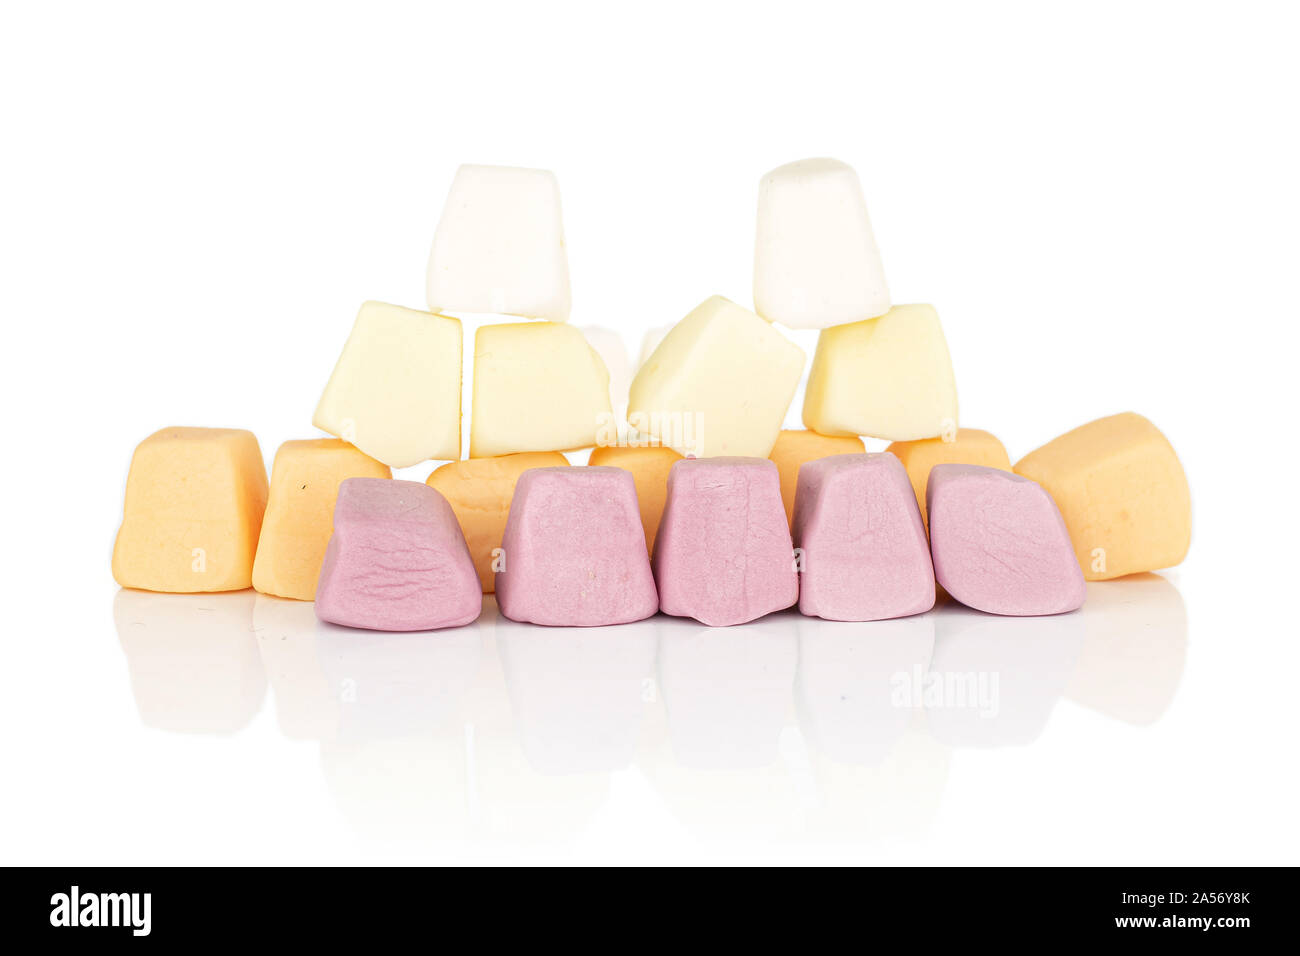 Lot of whole arranged soft pastel candy isolated on white background Stock Photo